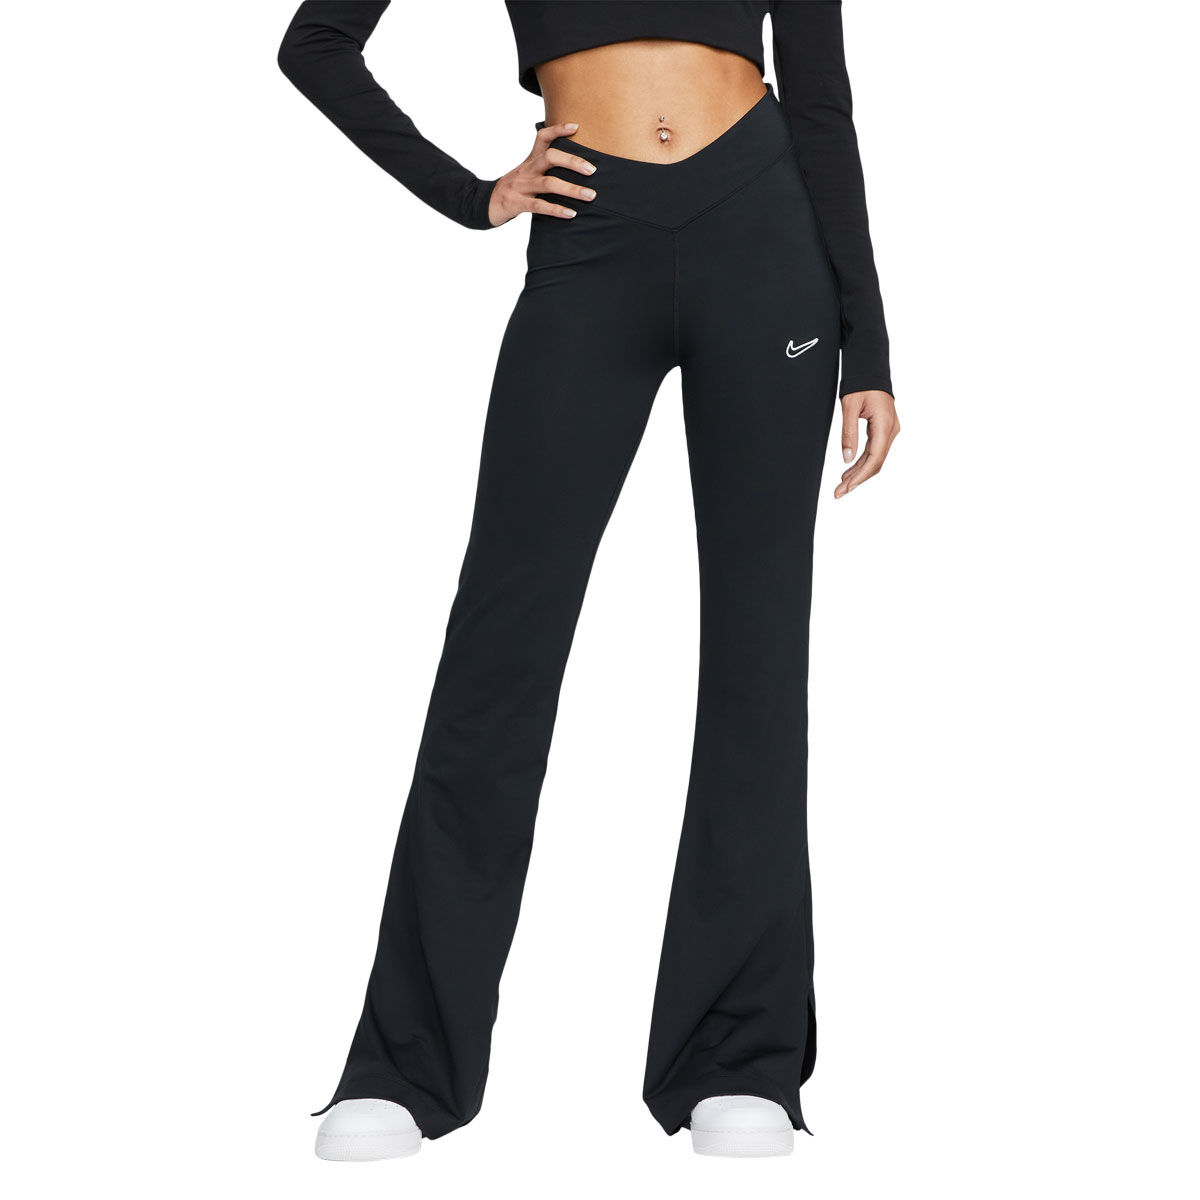 Nike Dri-Fit Leggings Women's XSS Black Flare Active Gym Yoga Pants RN  56323